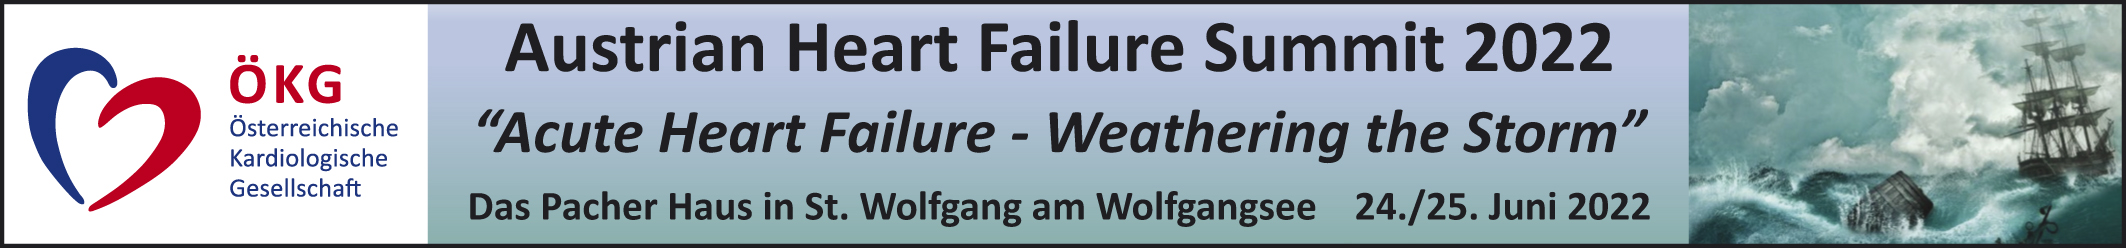 Austrian Heart Failure Summit 2022